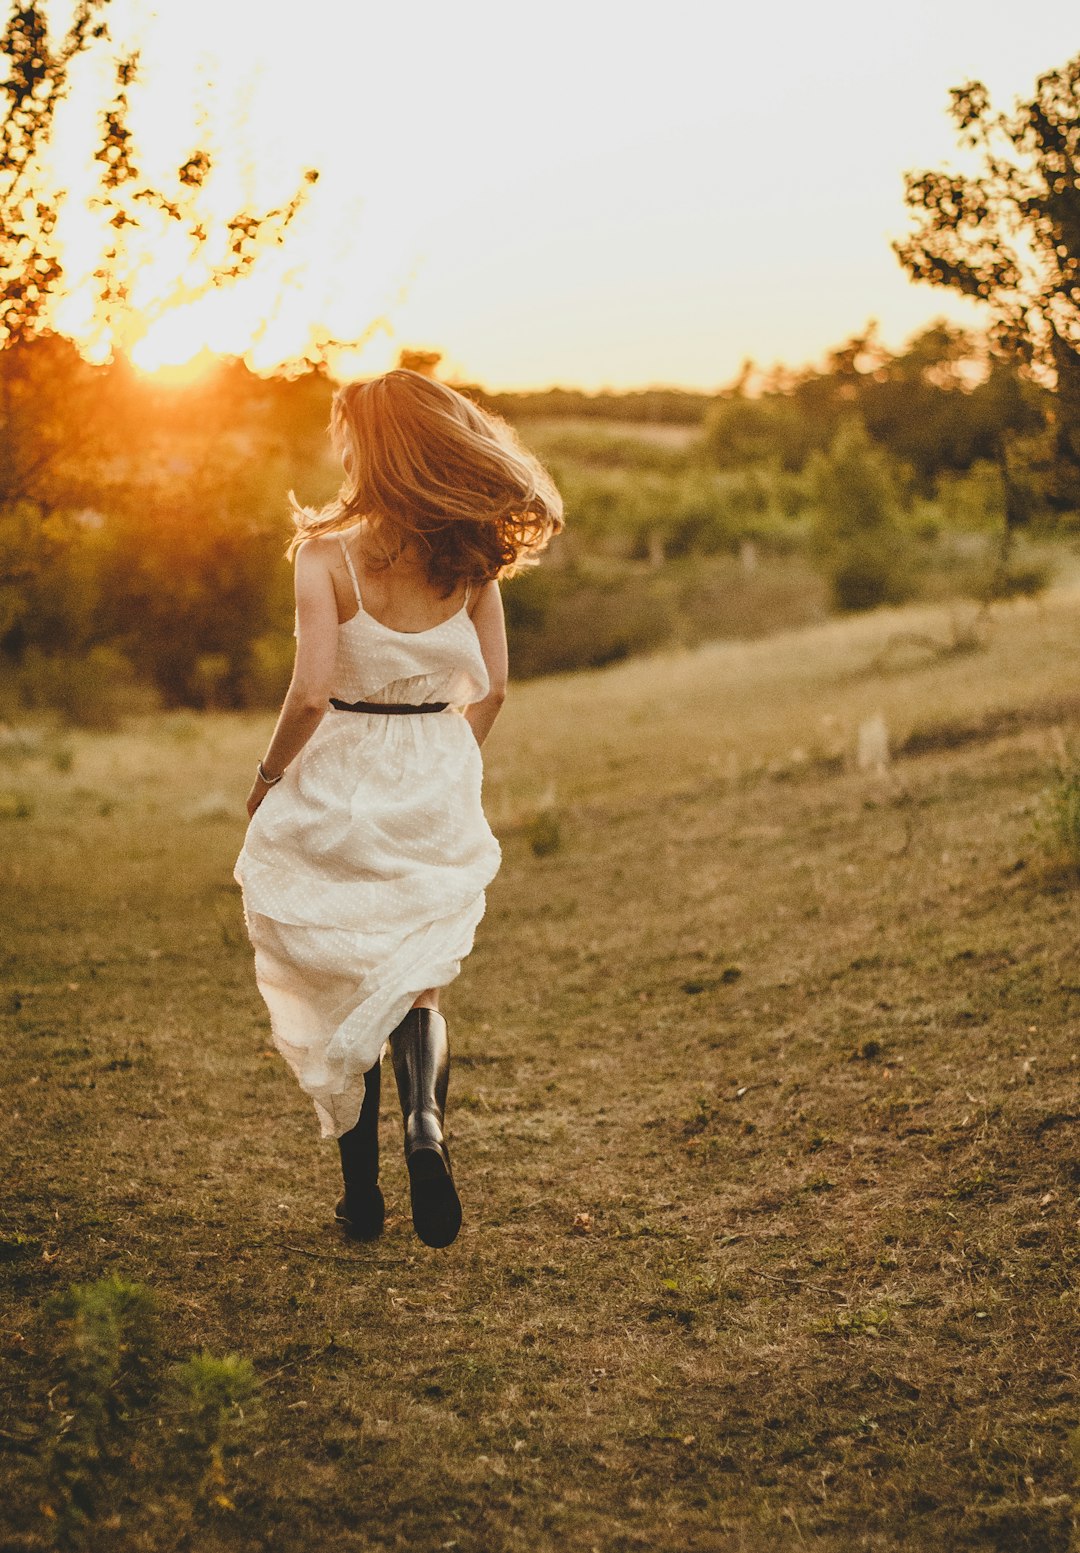 girl in white dress walking on green grass field during daytime